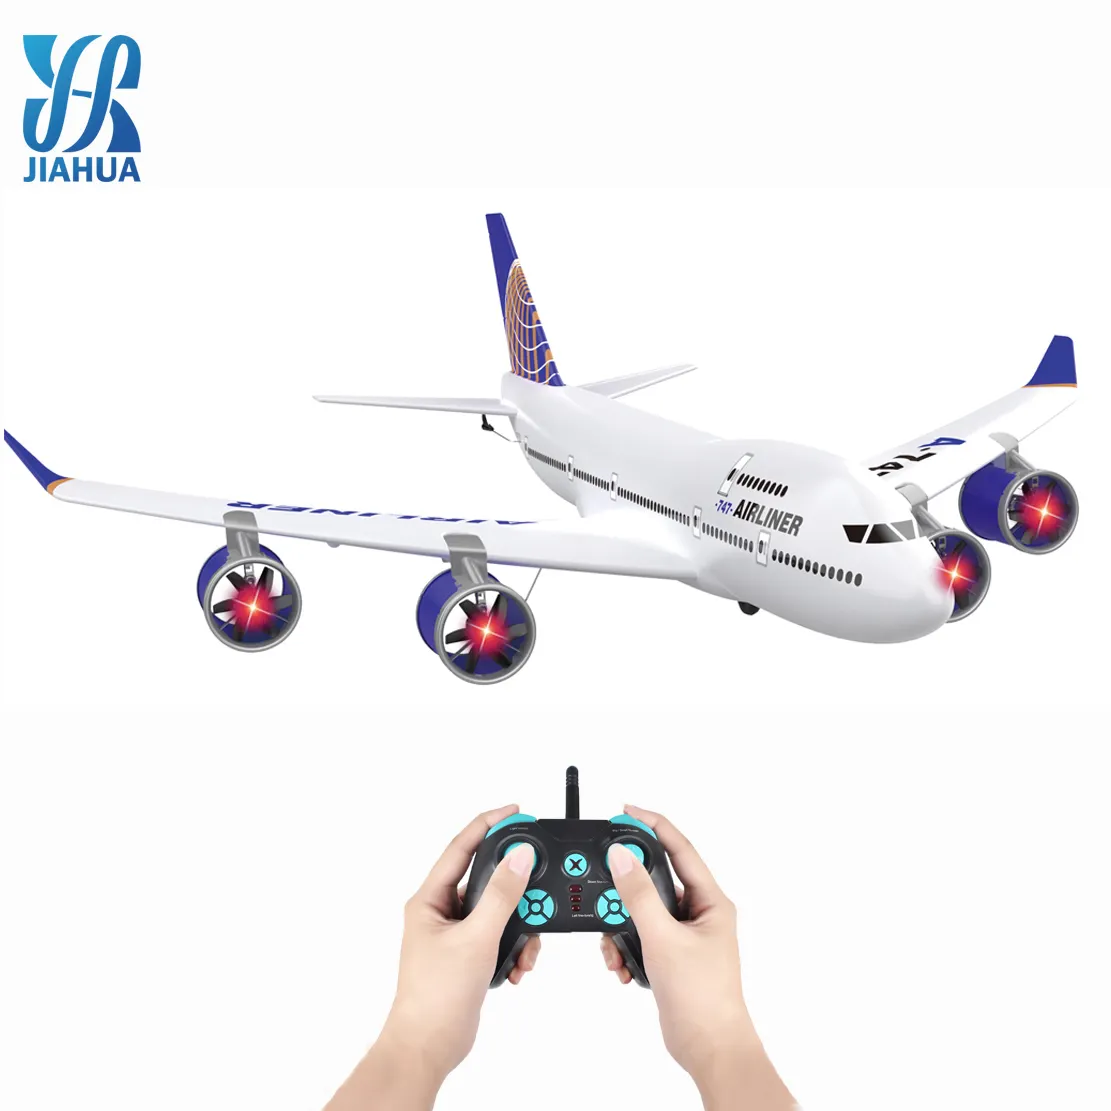 747 Boys Gift Plane Toy With Remote Control 3CH Model Uzaktan Kumandali Ucak Oyuncak RC Plane Remote Glider